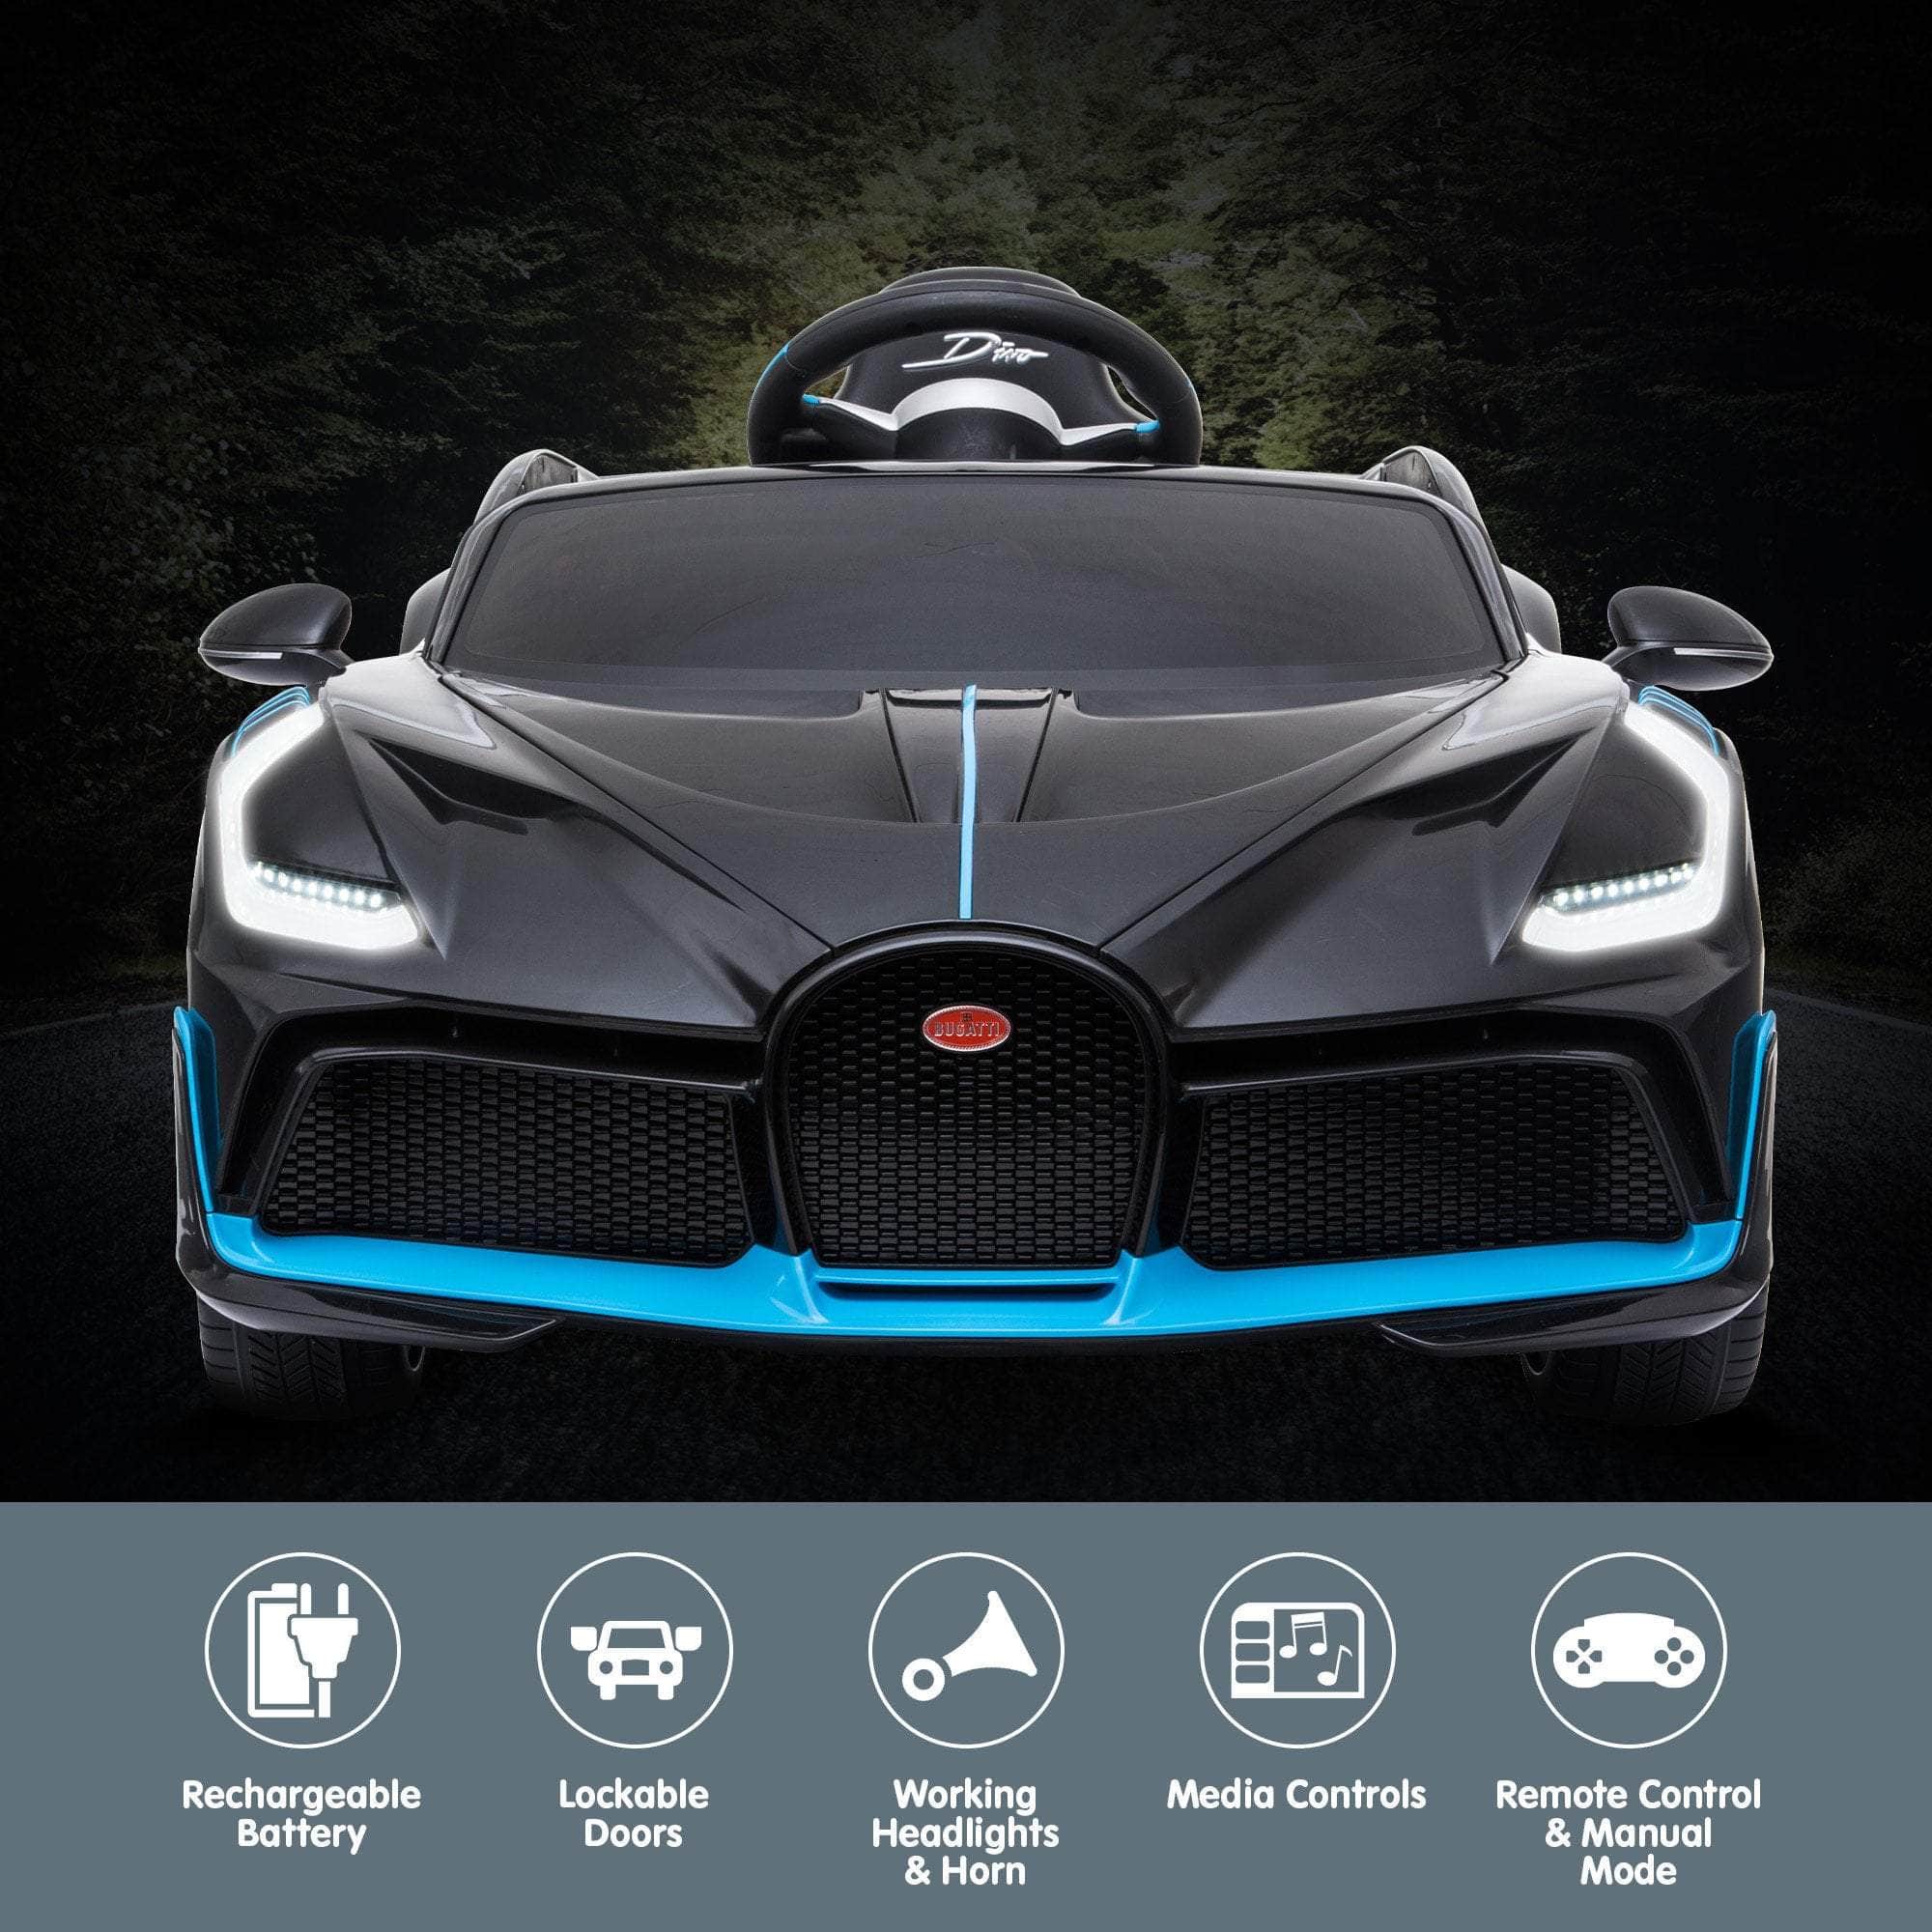 Bugatti Divo Kids Ride On Car Black/Blue/Red Edition